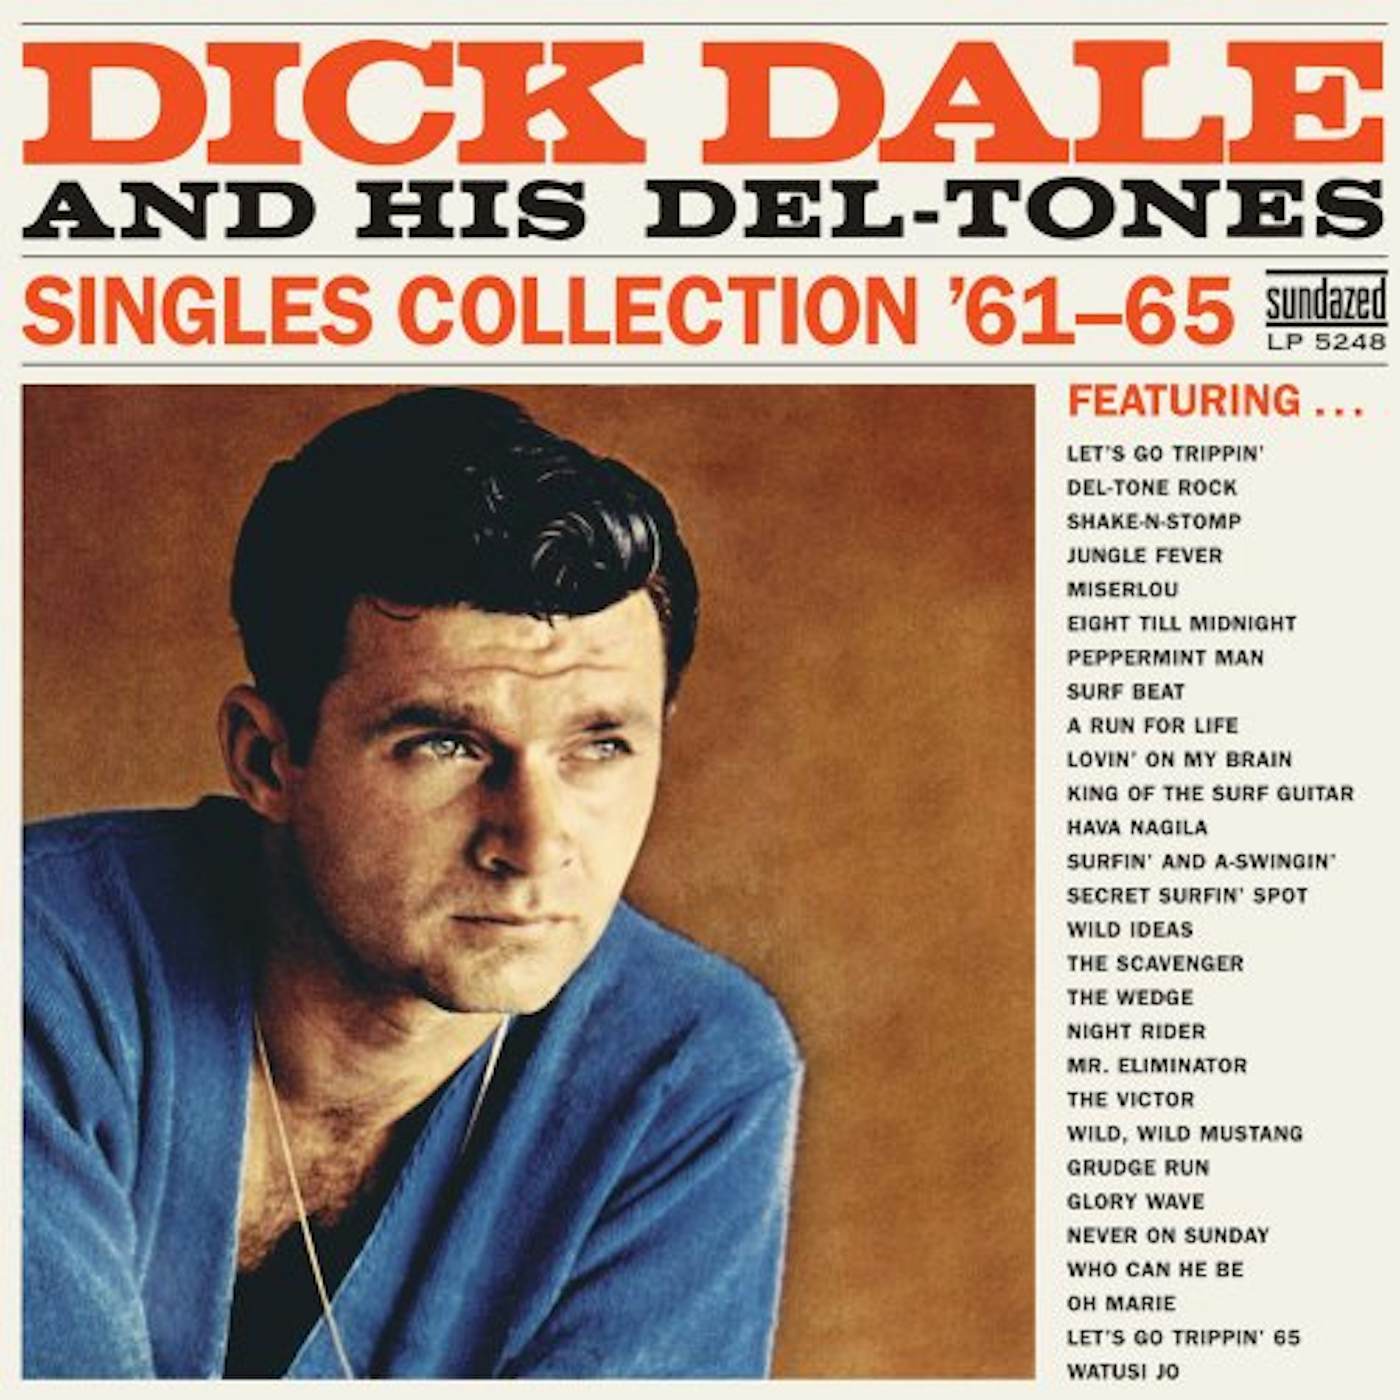 Dick Dale & His Del-Tones SINGLES COLLECTION 61-65 Vinyl Record